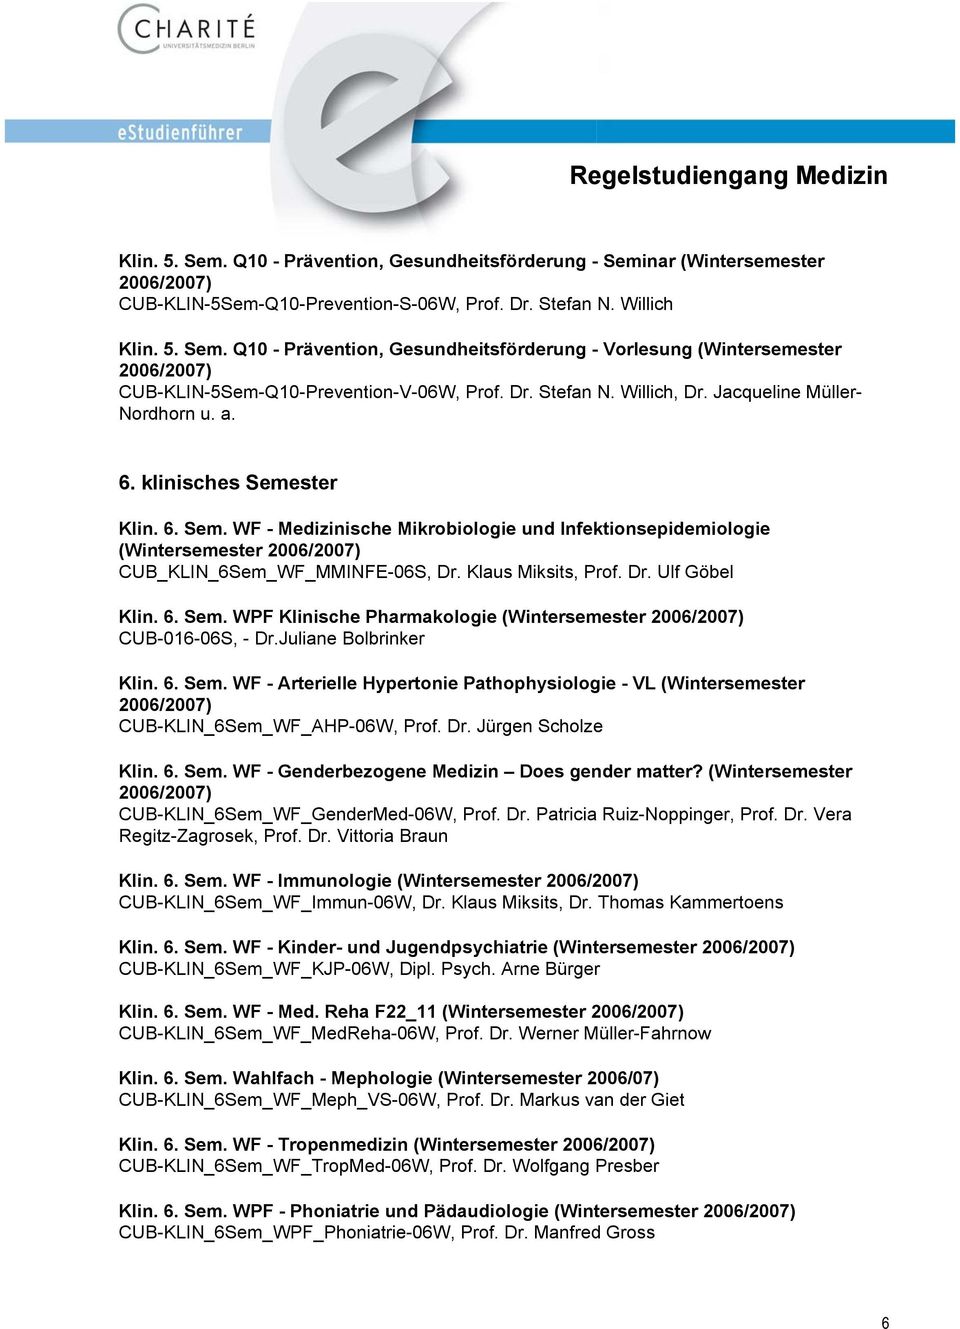 Klaus Miksits, Prof. Dr. Ulf Göbel Klin. 6. Sem. WPF Klinische Pharmakologie (Wintersemester 2006/2007) CUB-016-06S, - Dr.Juliane Bolbrinker Klin. 6. Sem. WF - Arterielle Hypertonie Pathophysiologie - VL (Wintersemester 2006/2007) CUB-KLIN_6Sem_WF_AHP-06W, Prof.